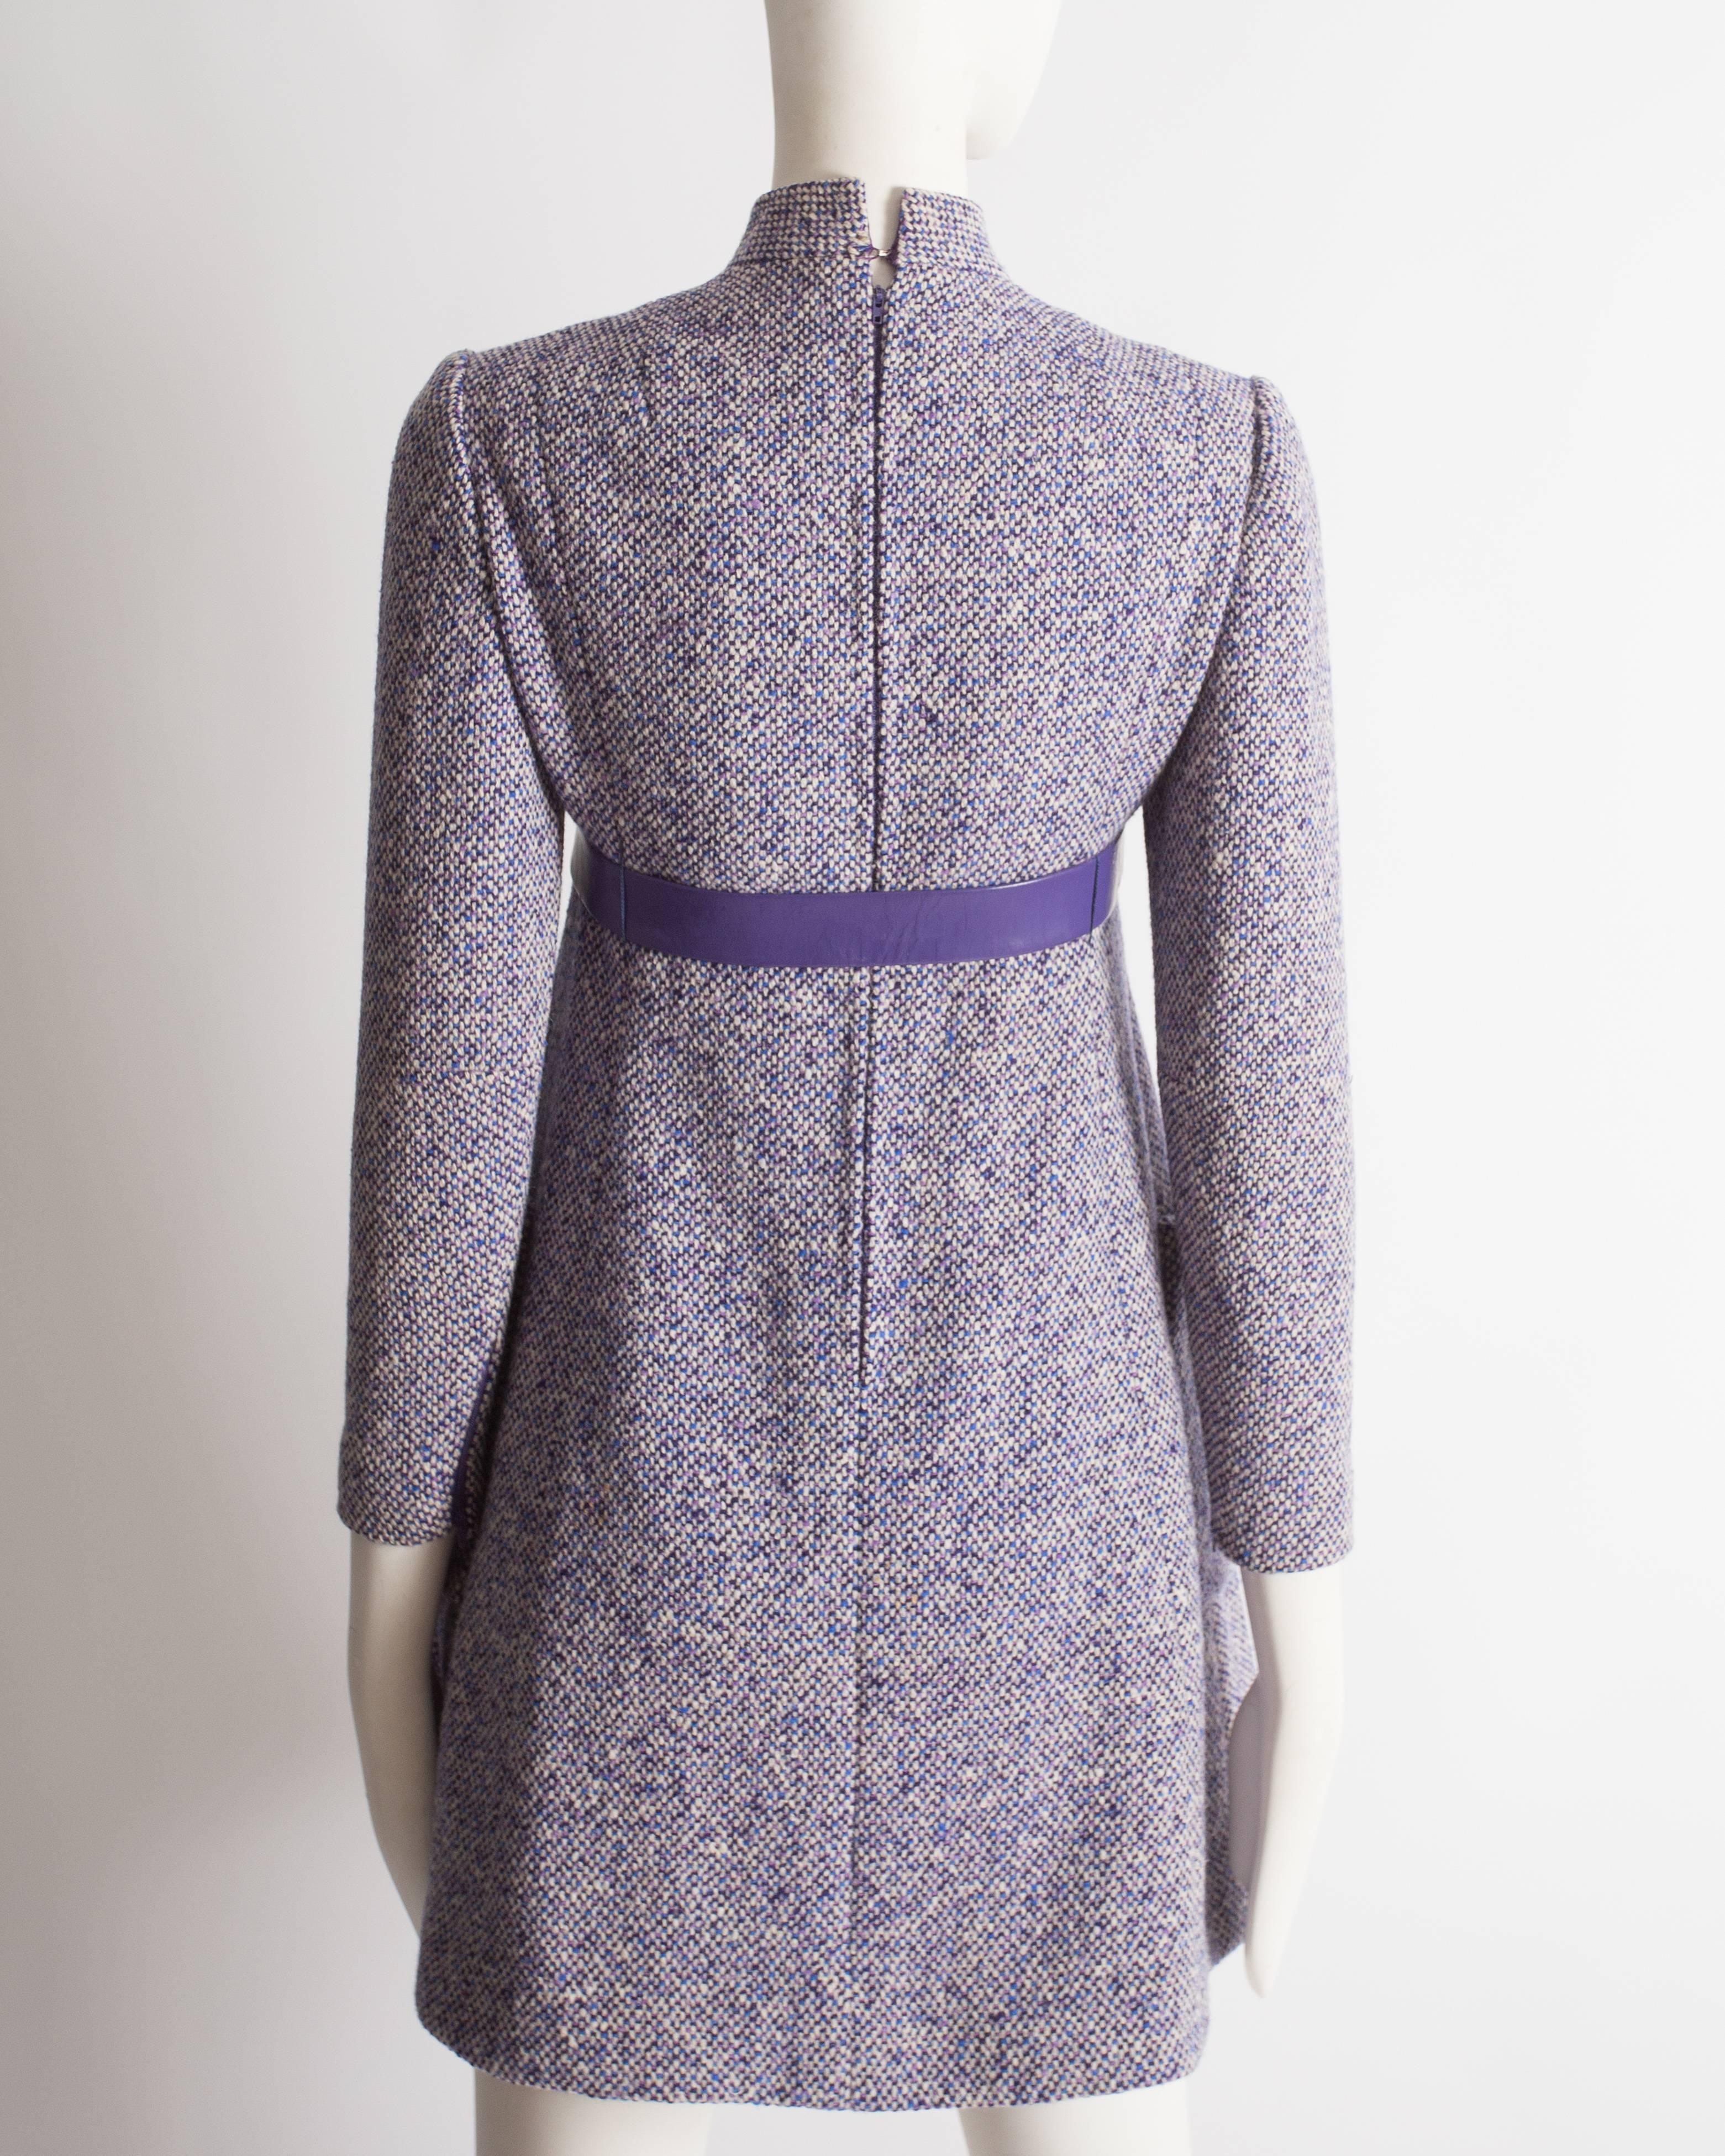 Women's Geoffrey Beene tweed mini dress, circa 1965